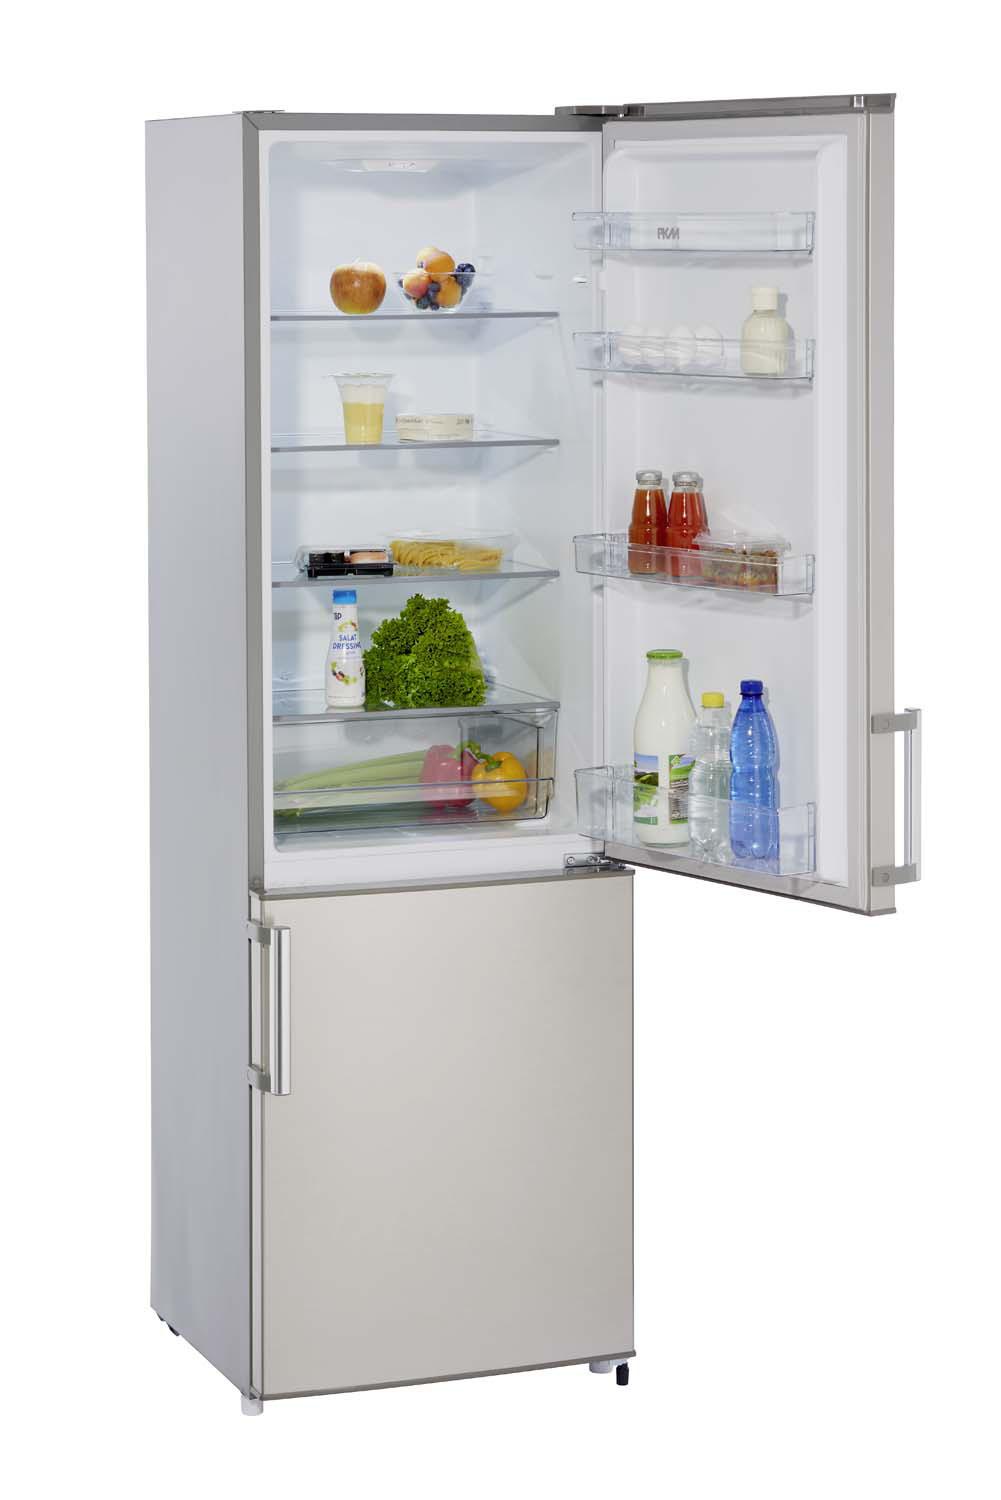 WELLXUNK Kühlschrank Reinigung Set,6Pcs Kühlschrank Abflussloch,Kühlschrank Bürste,Kühlschrank Abflusslochentferner,Kühlschrank Reinigungsbürste,Lochentferner Reinigungswerkzeug für Kühlschrank 